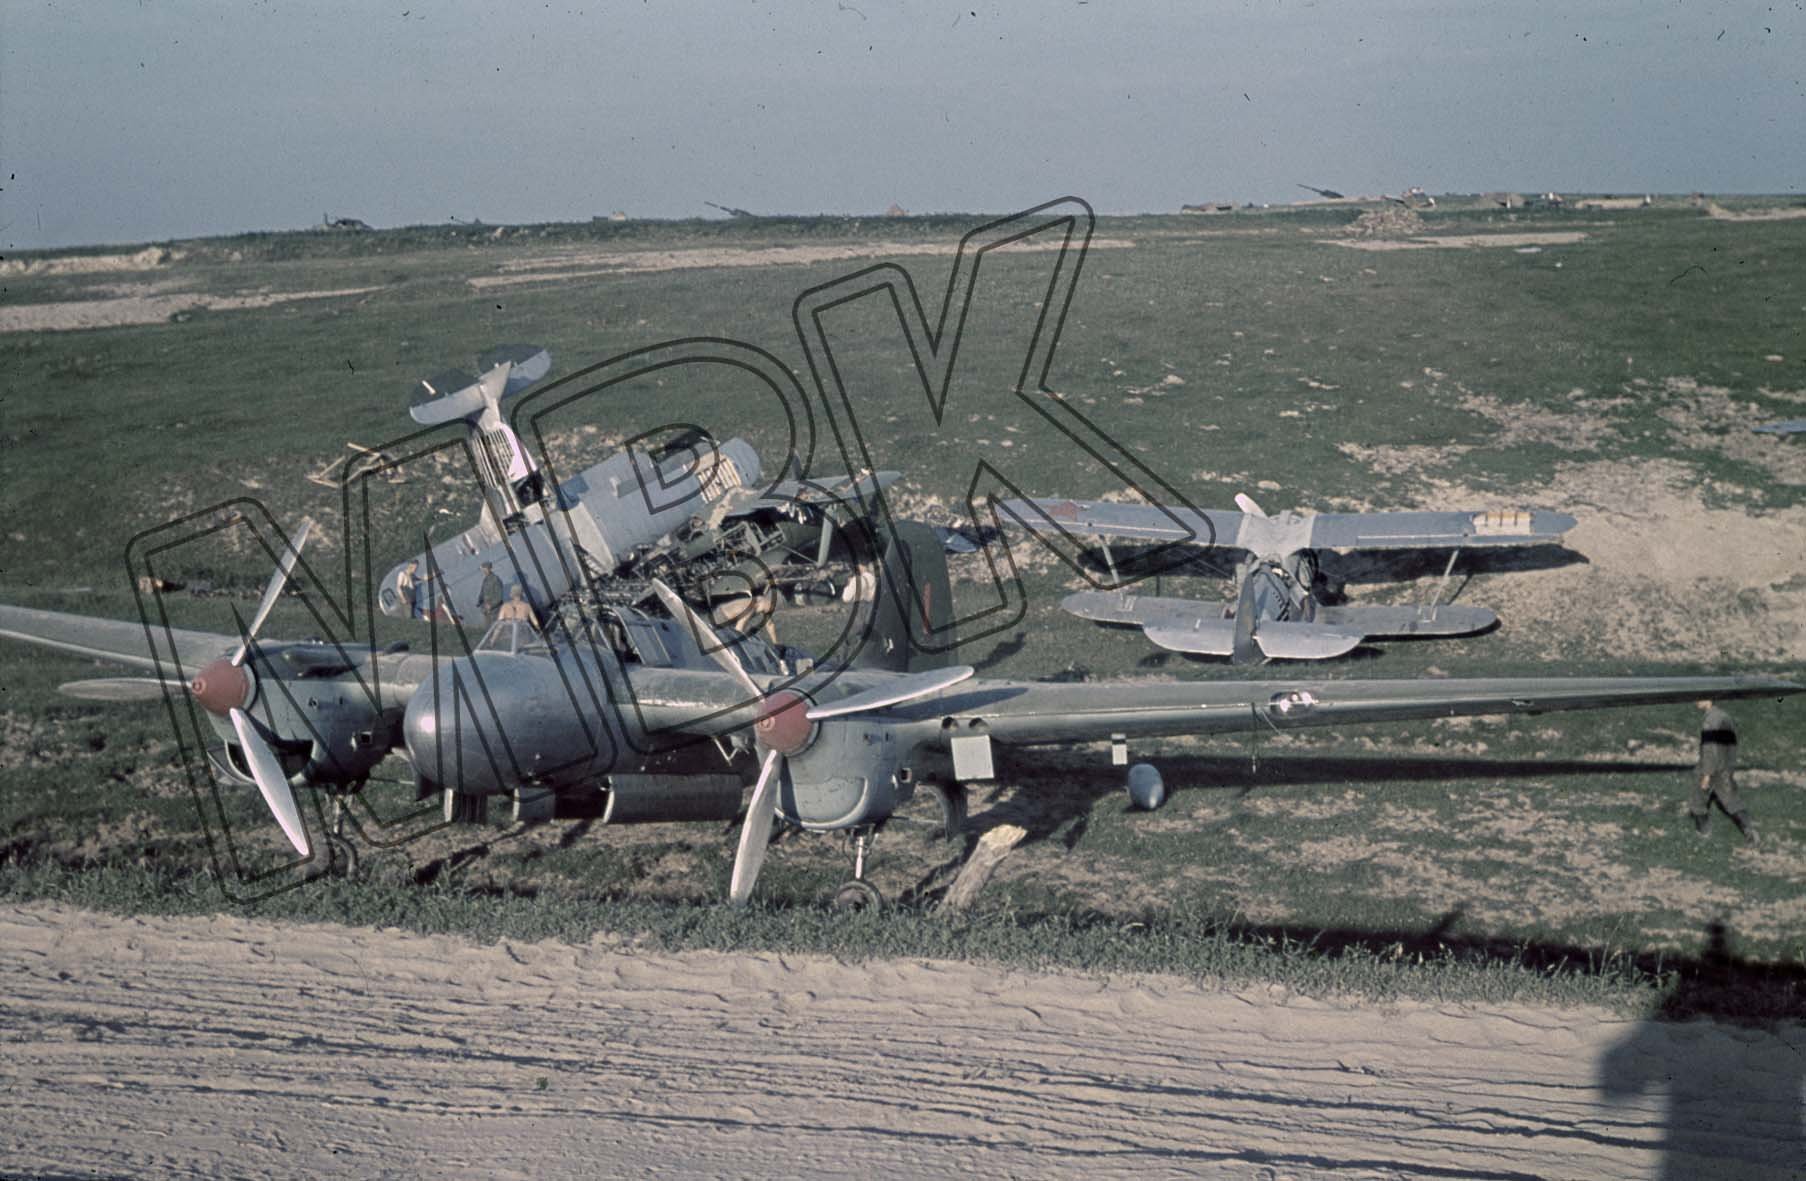 Fotografie: Zerstörte sowjetische Flugzeuge, bei Minsk, 10. Juli 1941 (Museum Berlin-Karlshorst RR-P)